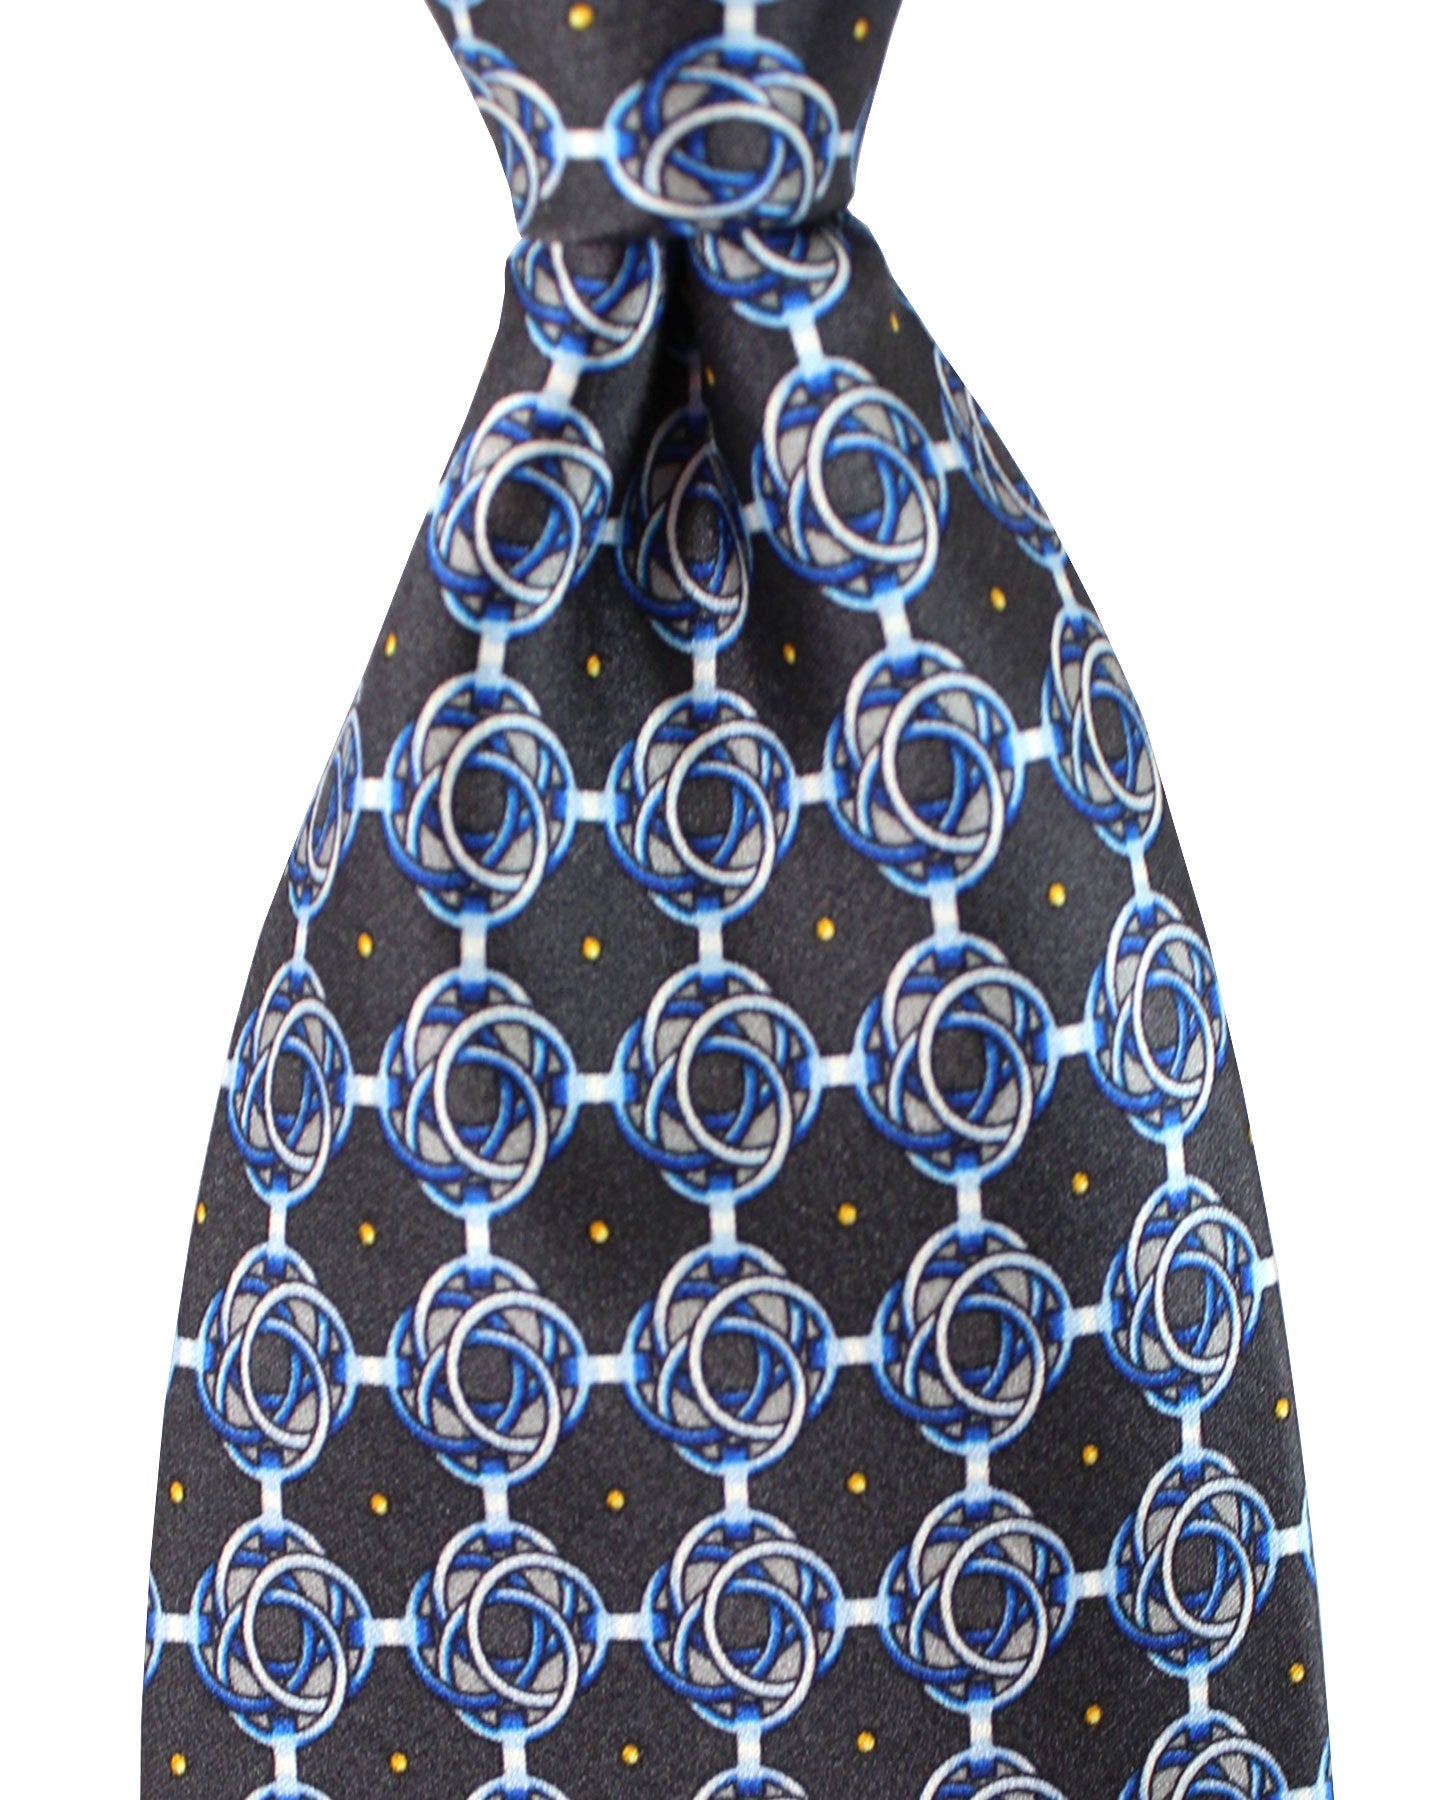 Zilli Silk Tie Black Blue Gray Geometric Design - Wide Necktie